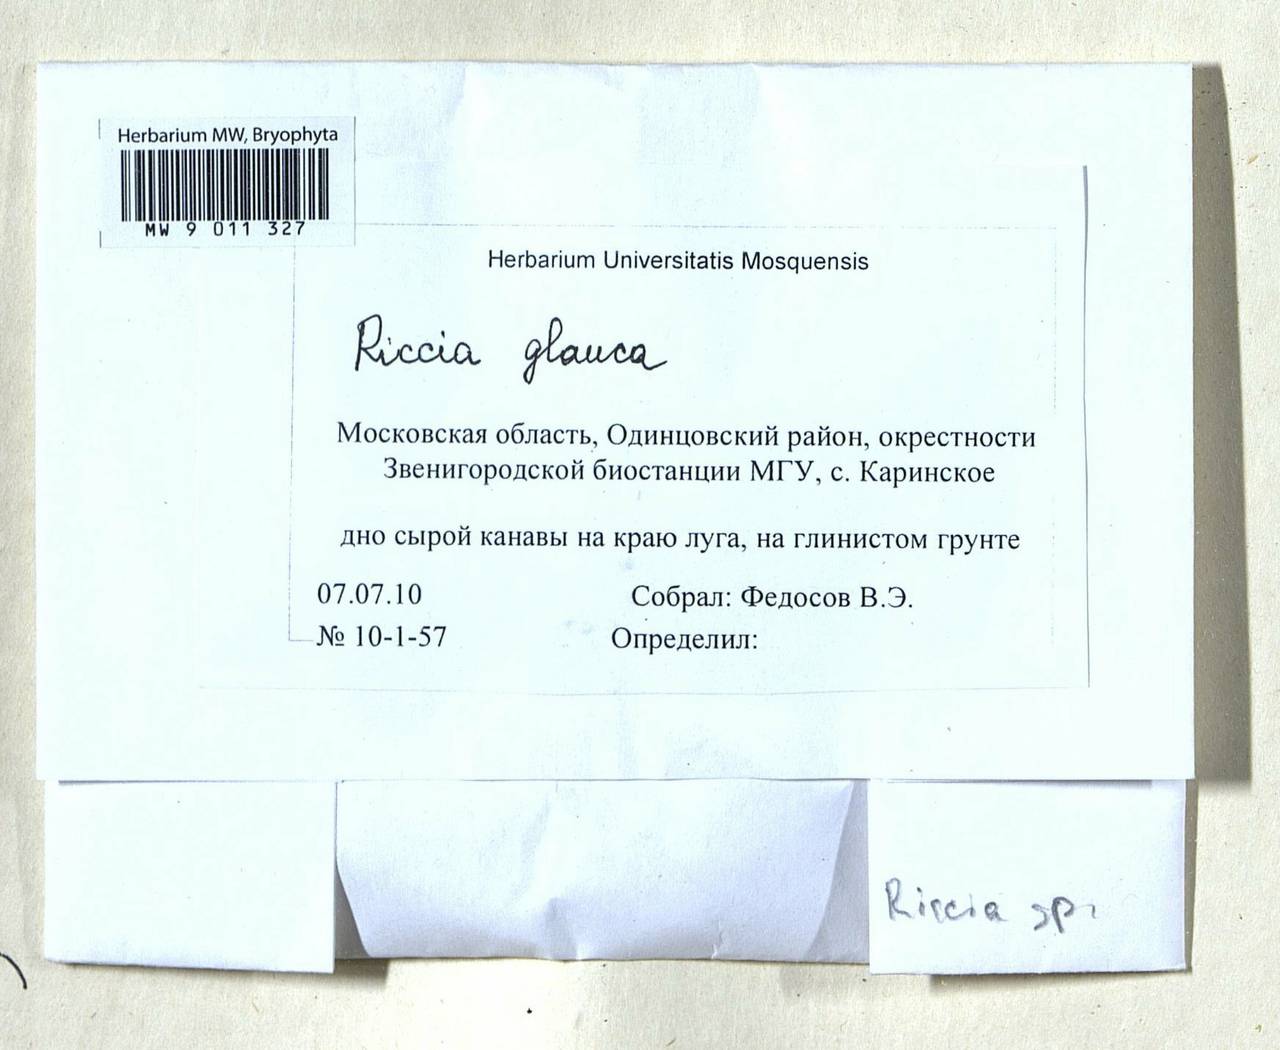 Riccia glauca L., Bryophytes, Bryophytes - Moscow City & Moscow Oblast (B6a) (Russia)